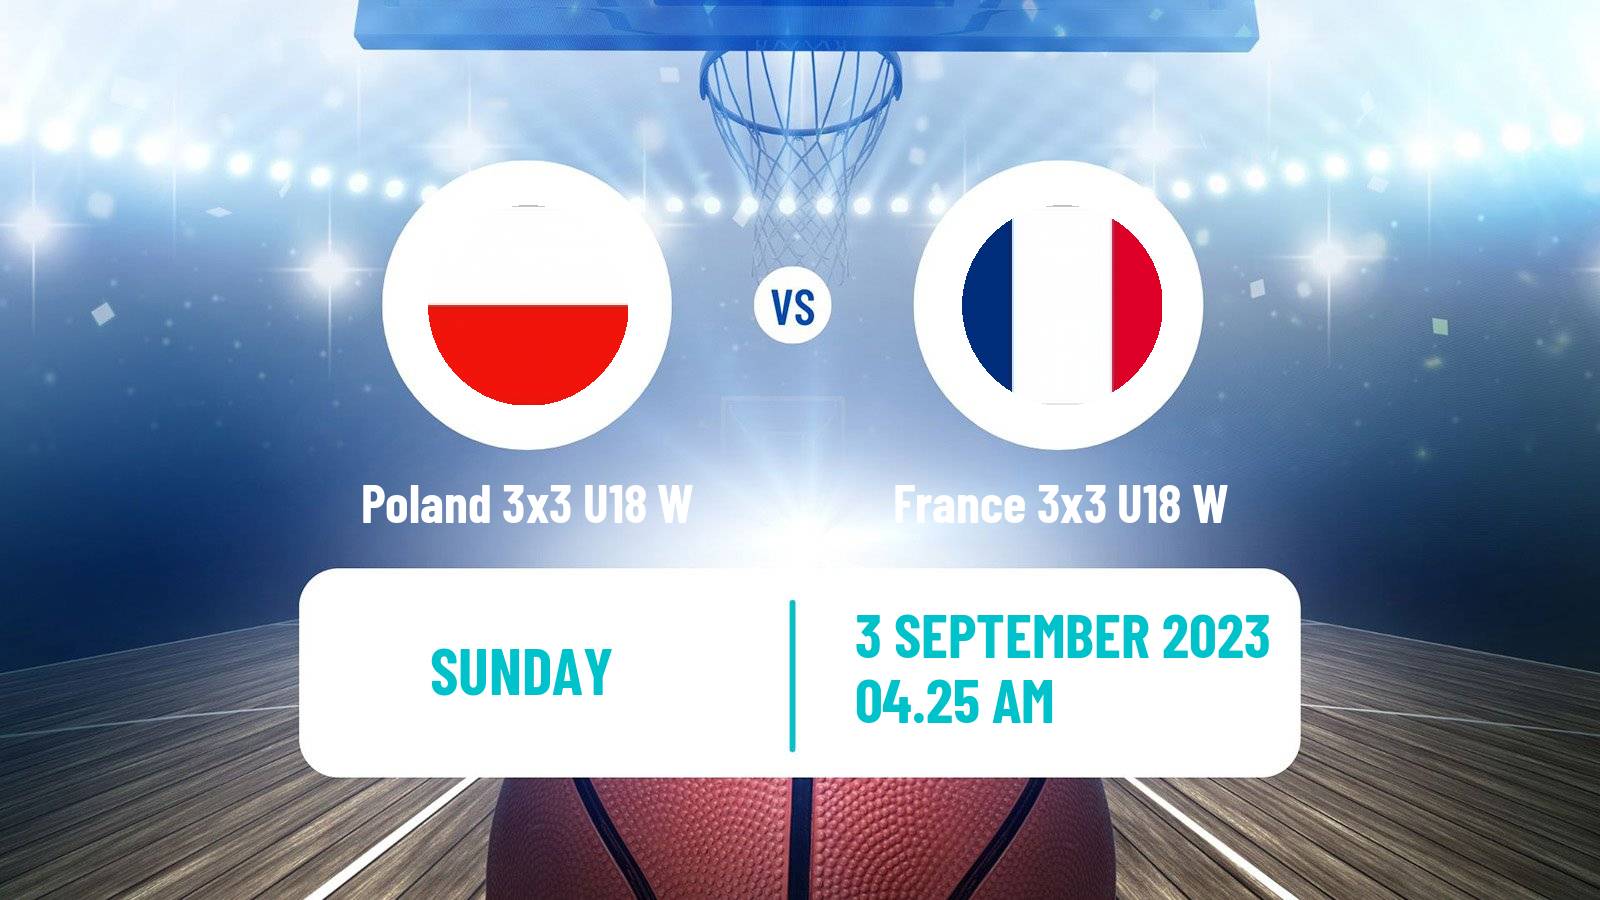 Basketball World Cup Basketball 3x3 U18 Women Poland 3x3 U18 W - France 3x3 U18 W